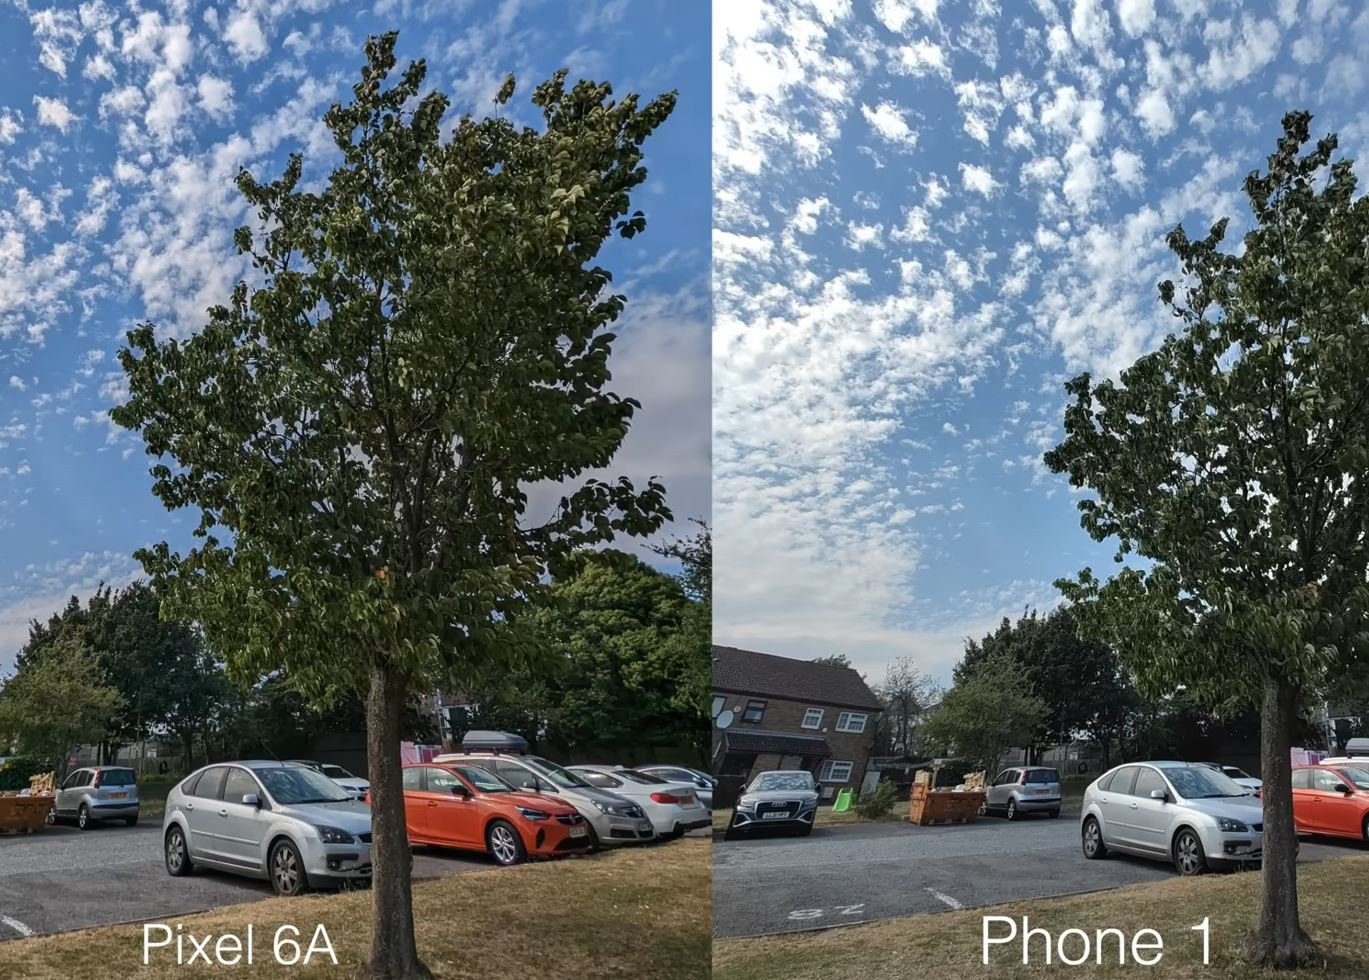 Google Pixel 6a vs Nothing phone 2